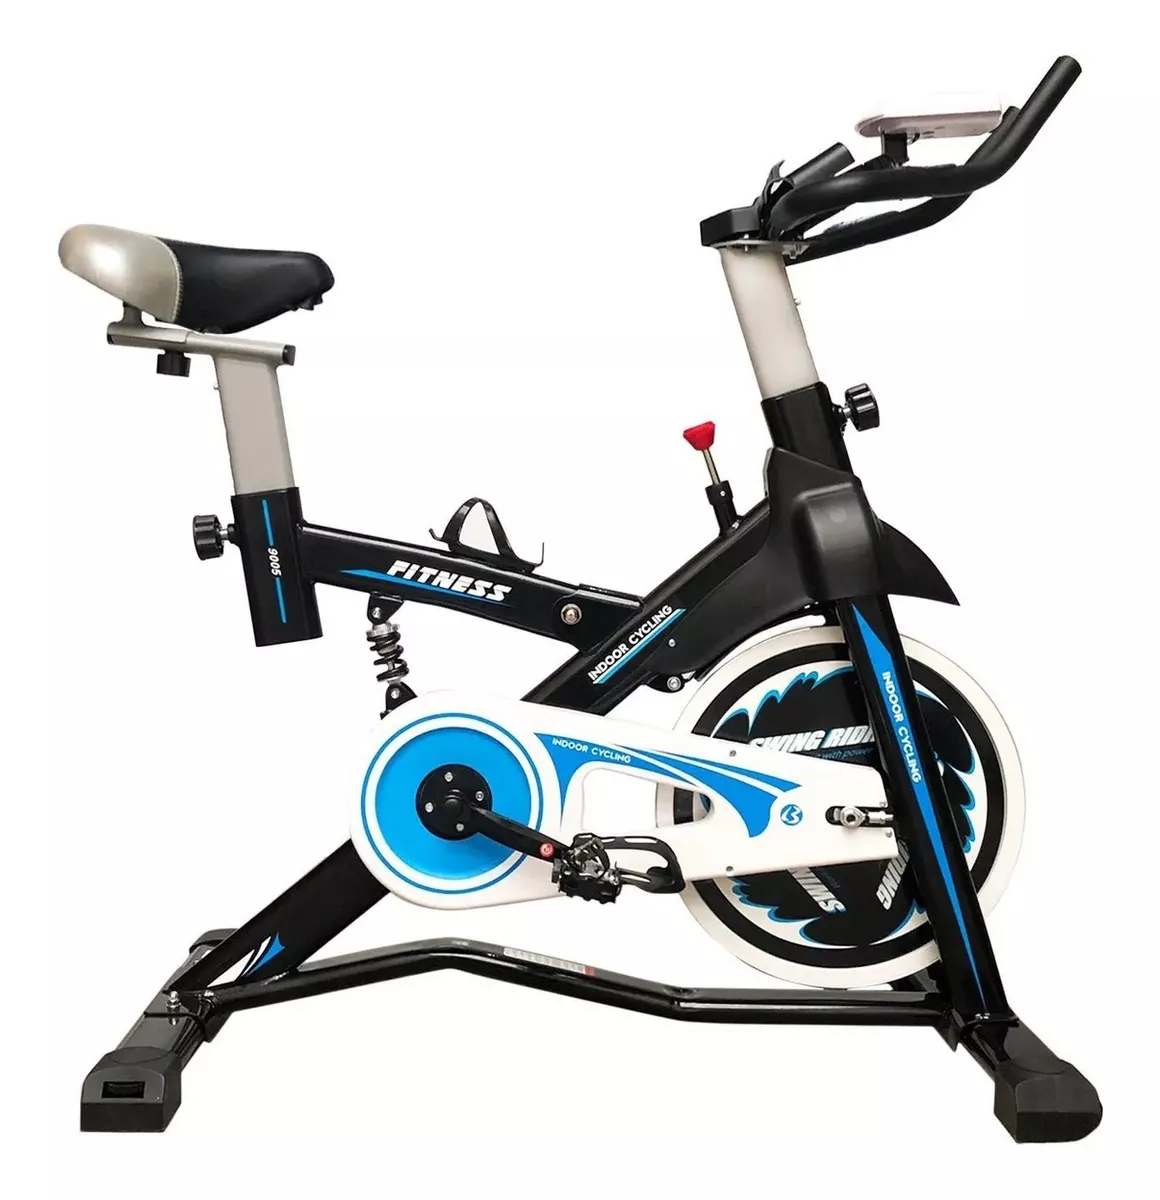 Bicicleta Fija Expert Gym002010 Para Spinning Negra Y Azul